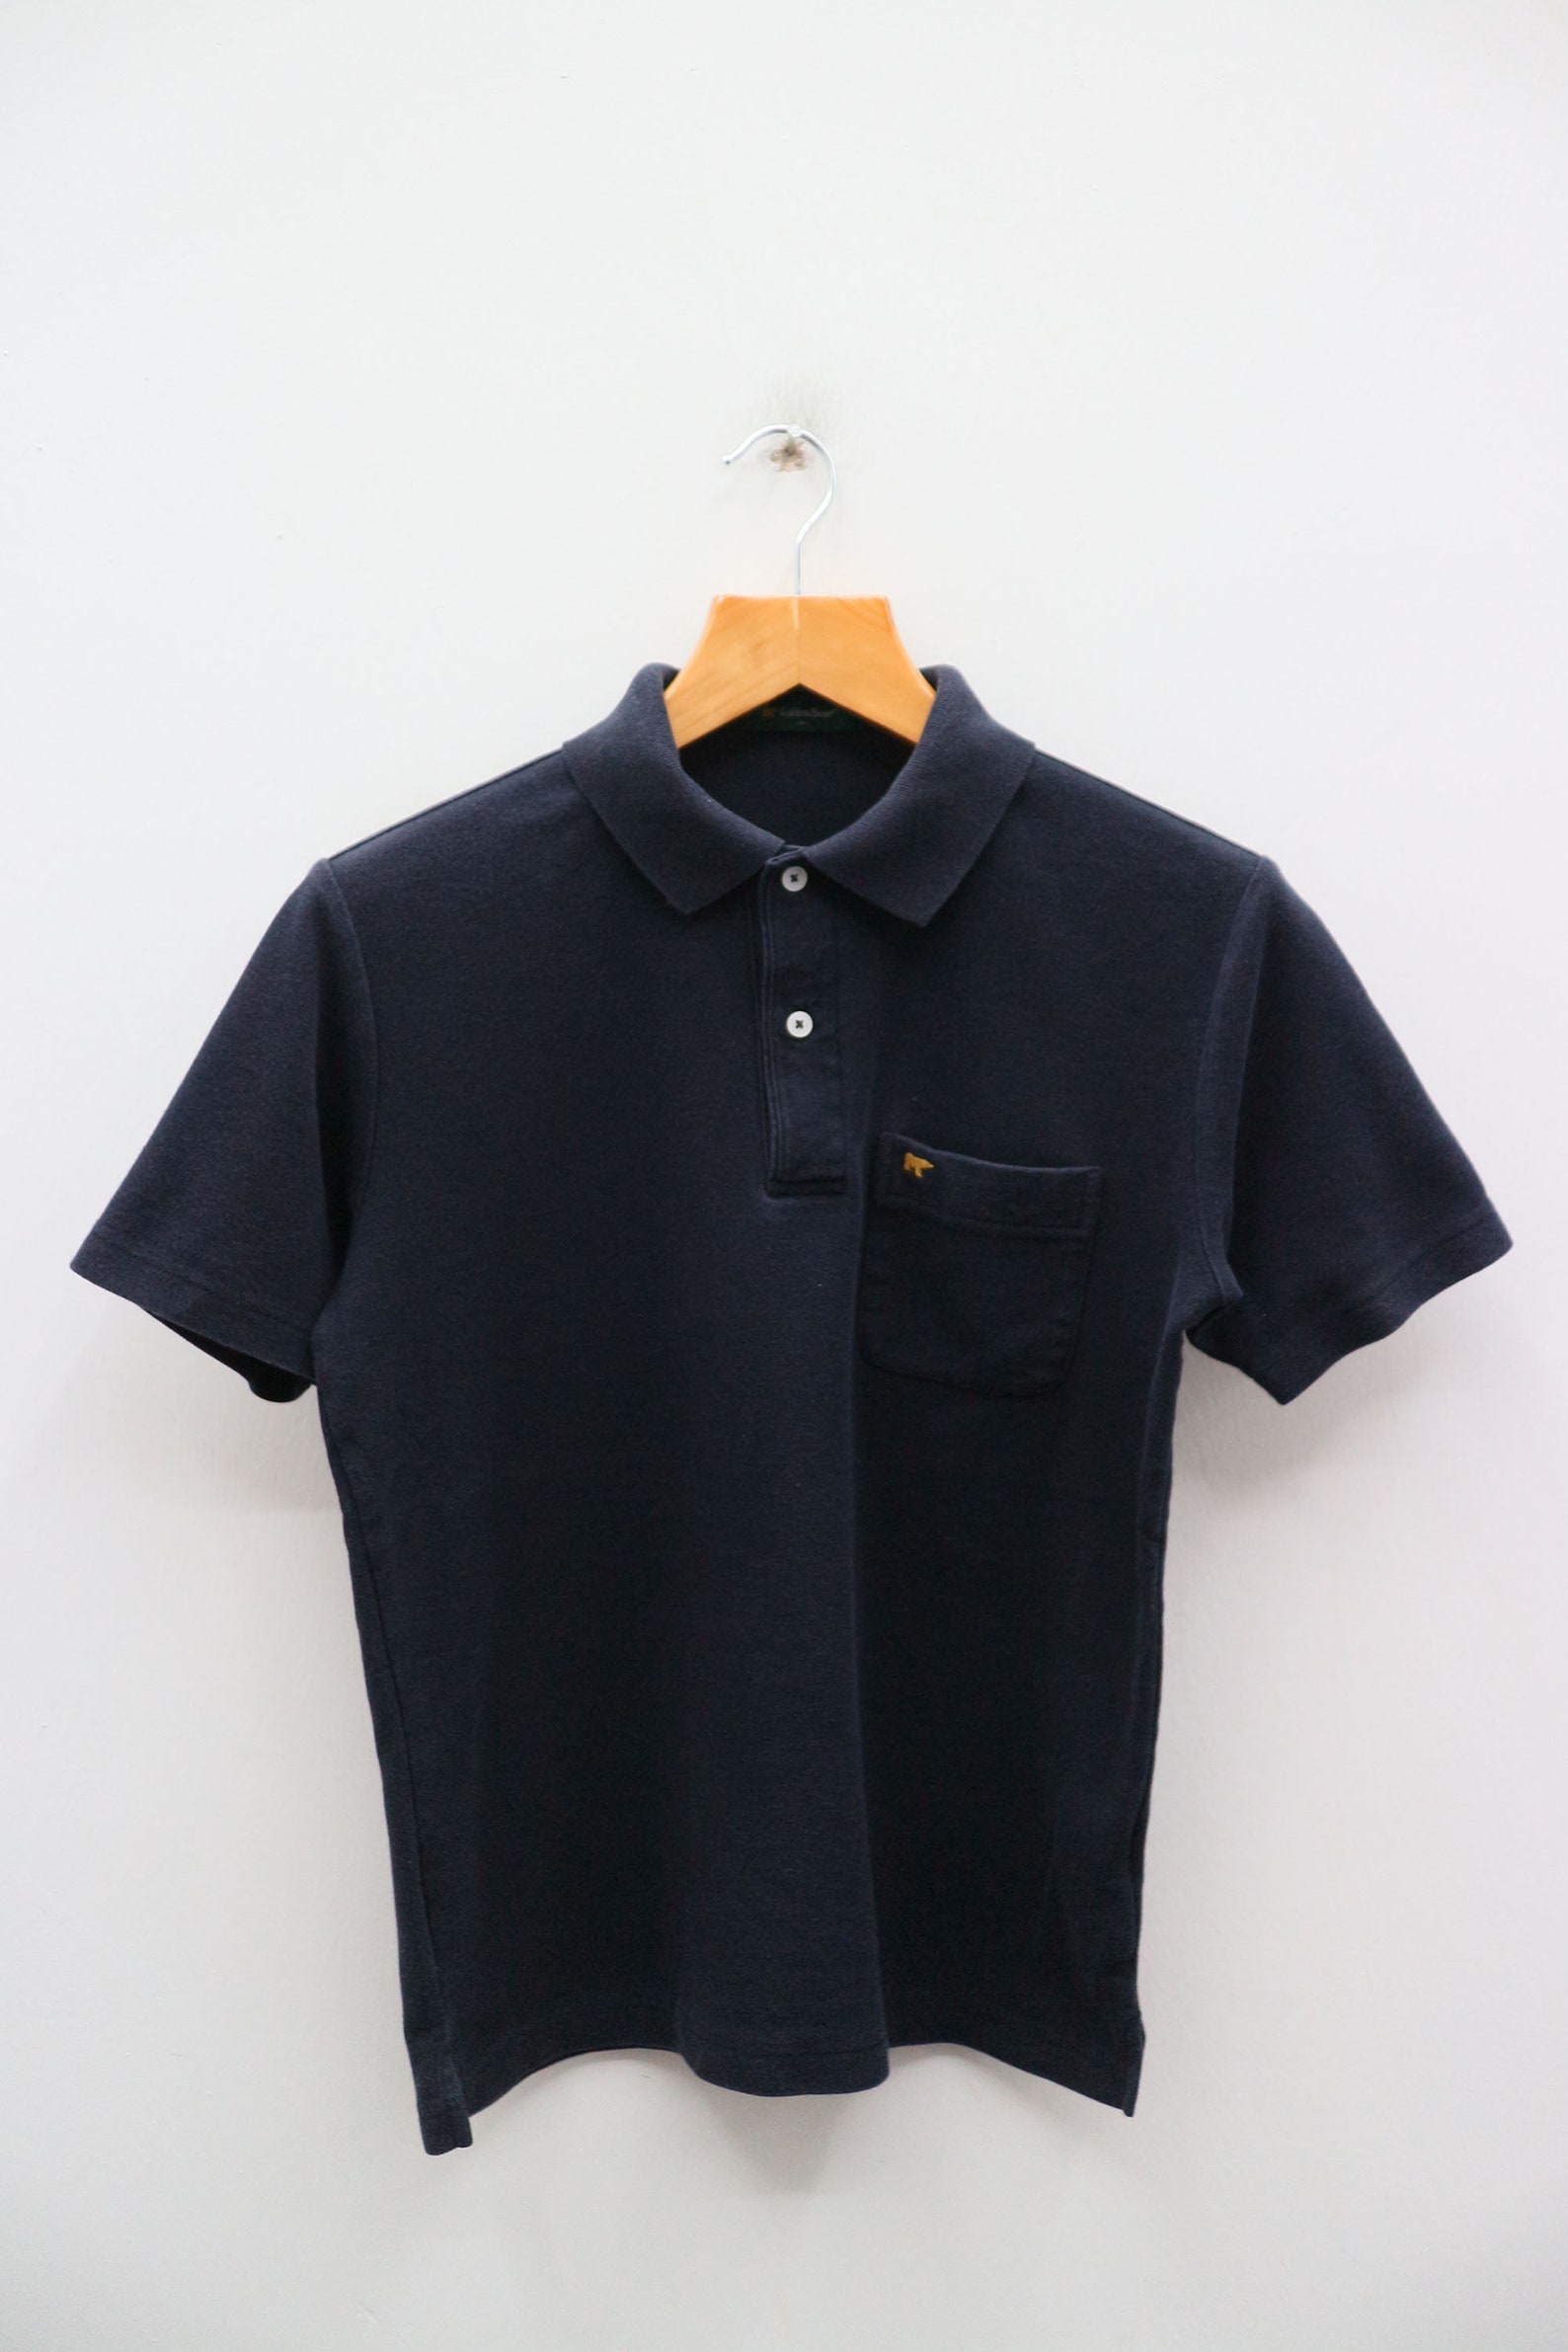 Vintage GOLDEN BEAR Small Logo Streetswear Black Polos Shirt | Etsy